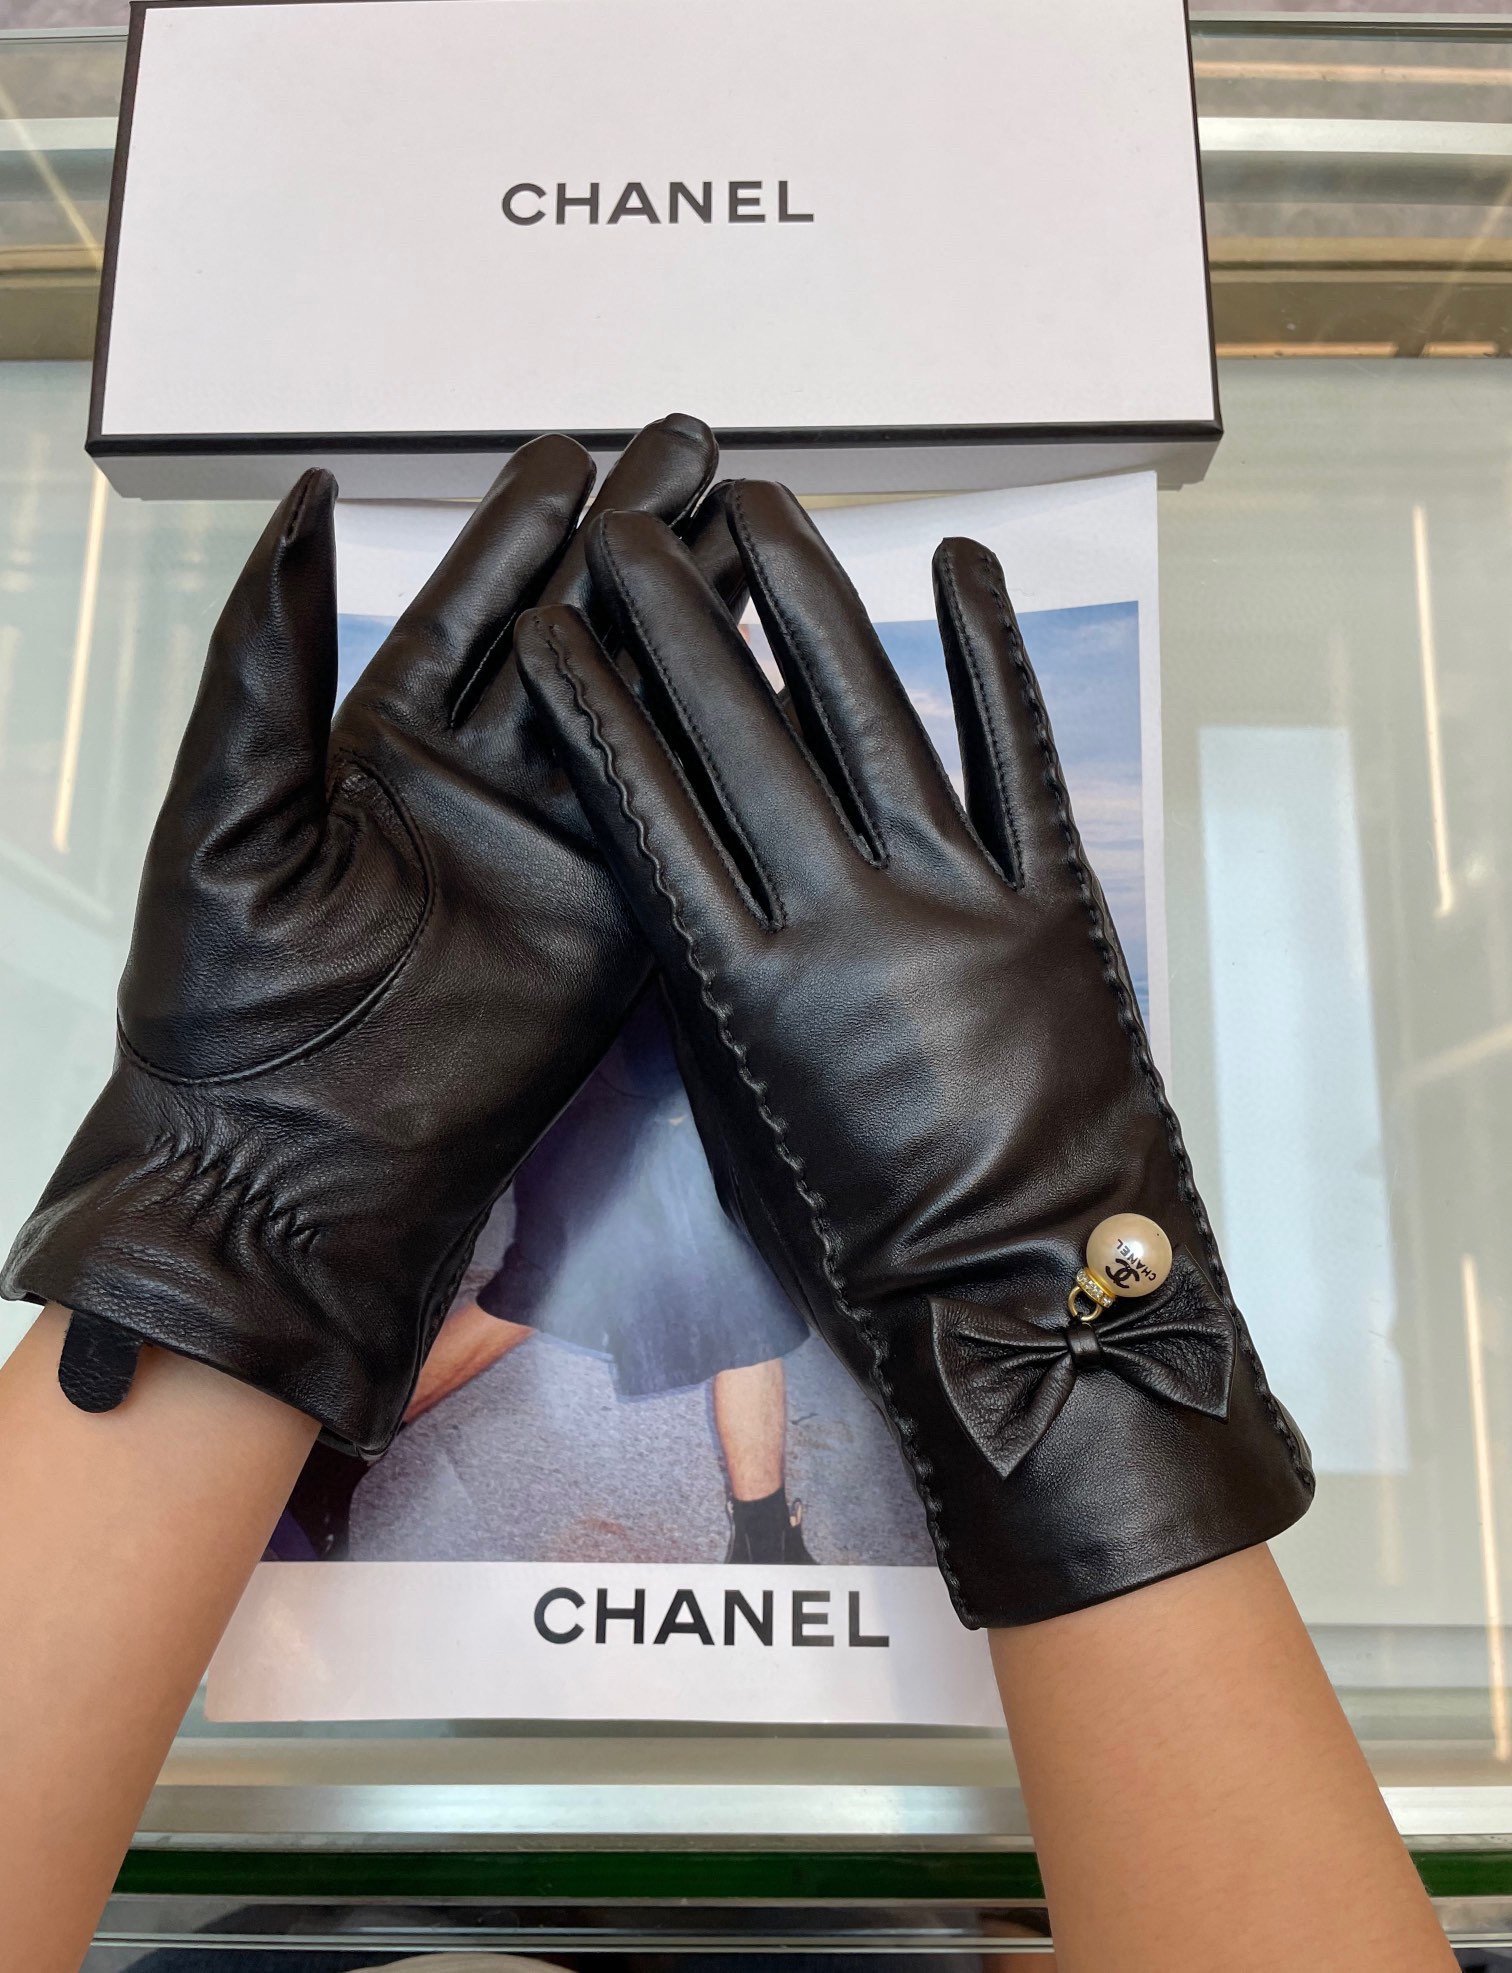 Chanel火爆朋友圈的女式真皮手套采用埃塞俄比亚进口触屏羊皮简单大方的款式添加小LOGO扣超柔加绒内里